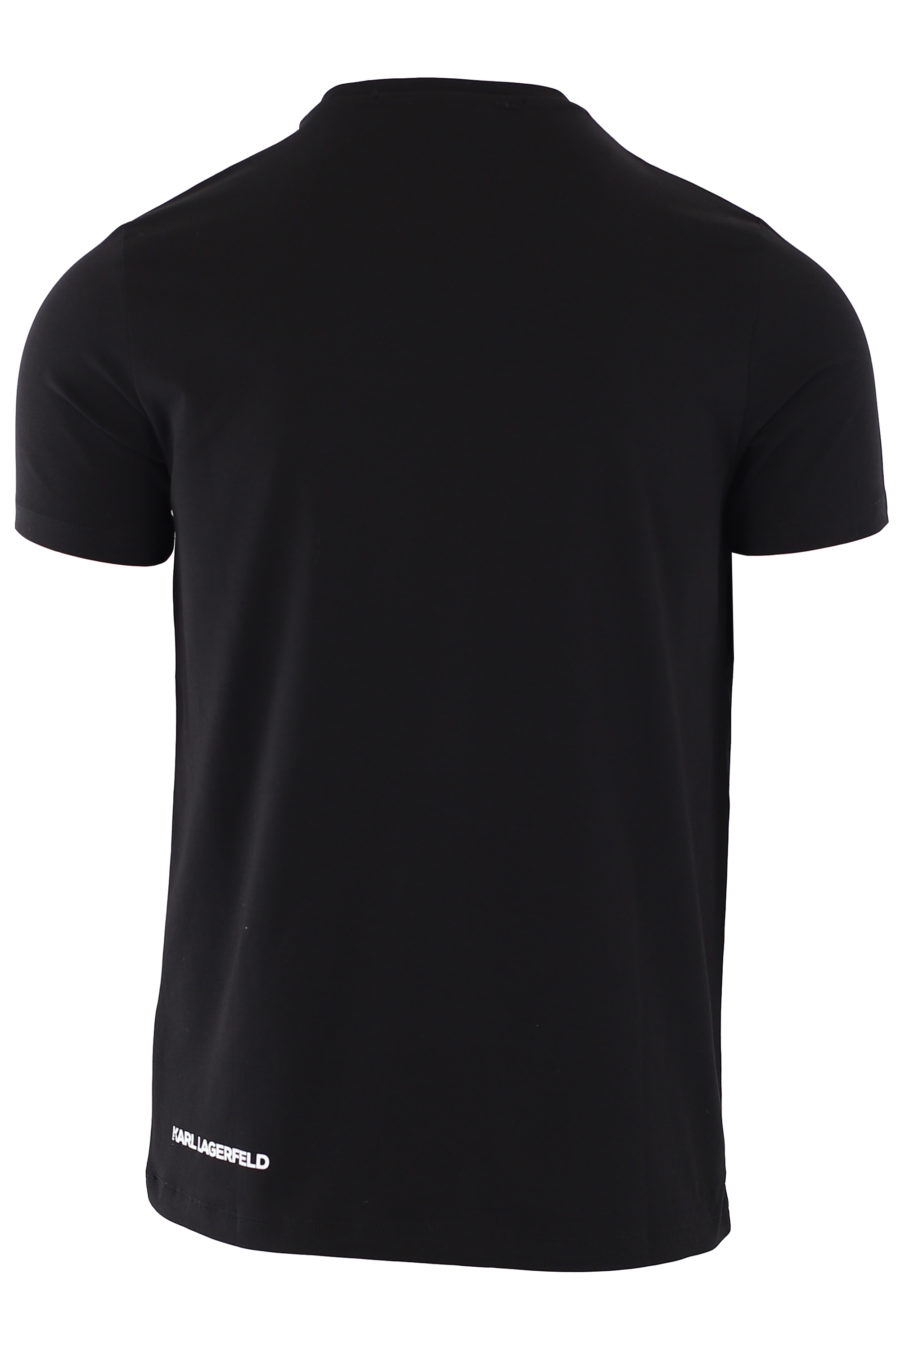 Camiseta negra con logo lateral pequeño - IMG 1373